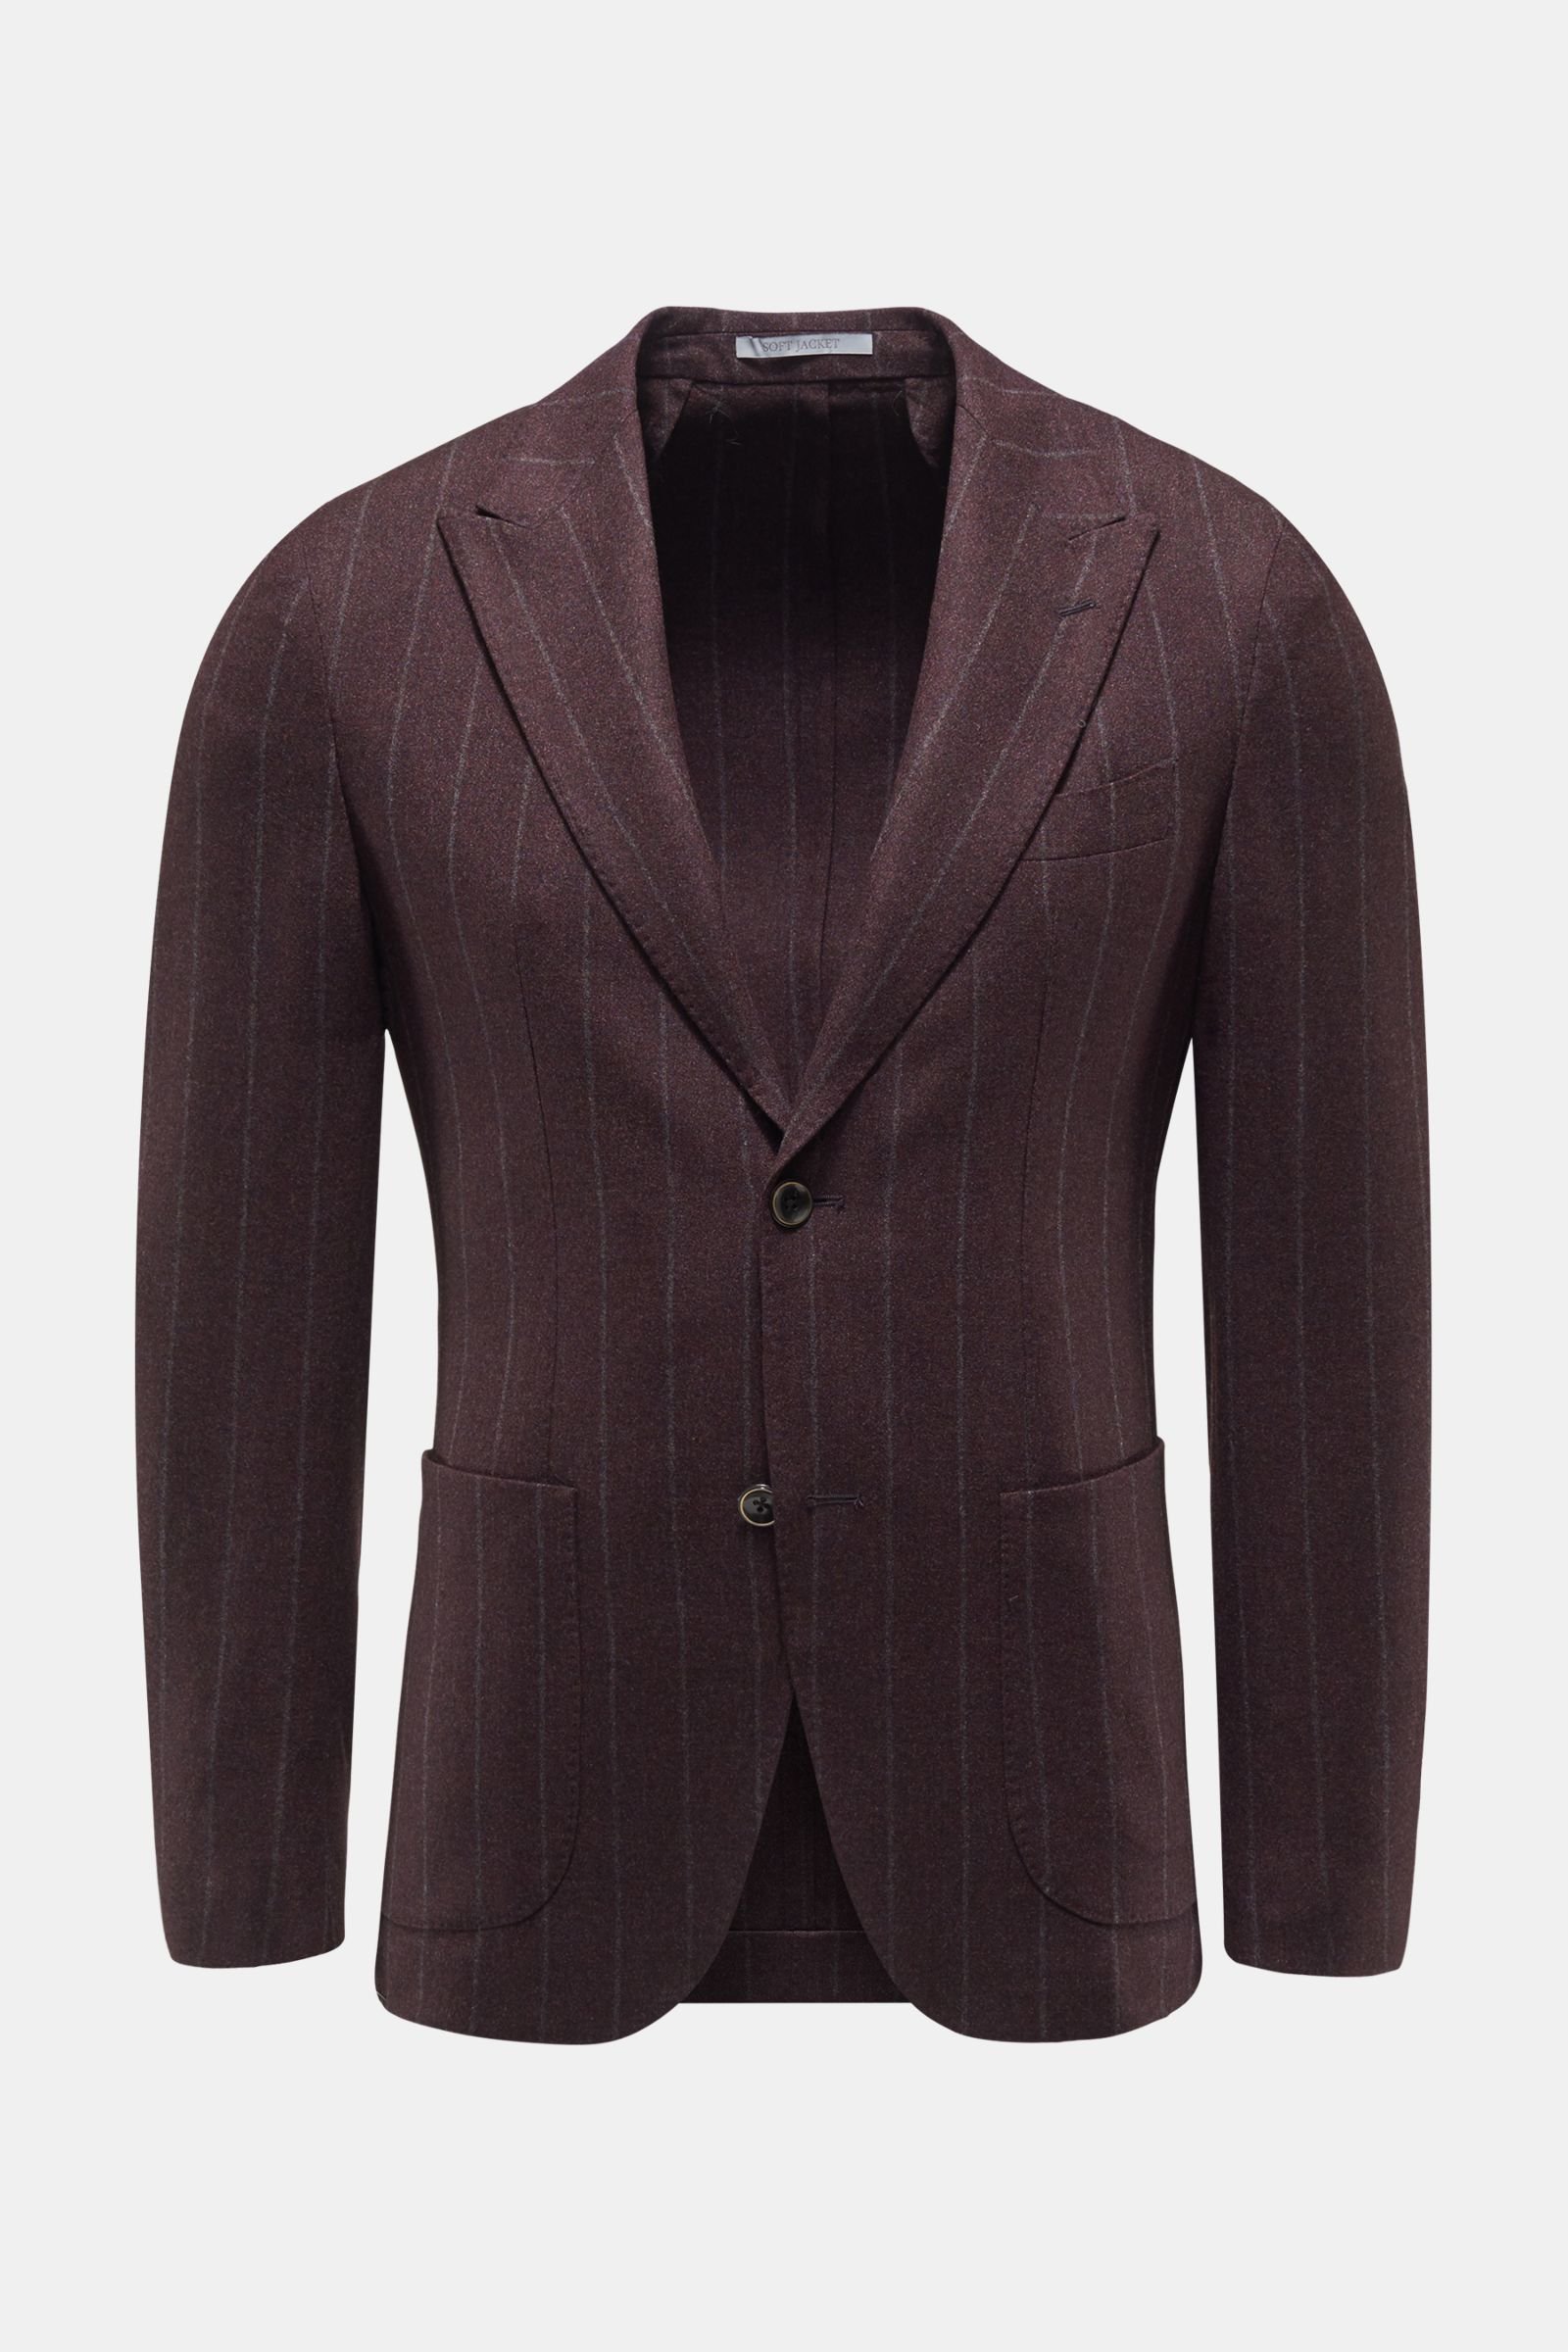 Smart-casual jacket burgundy striped